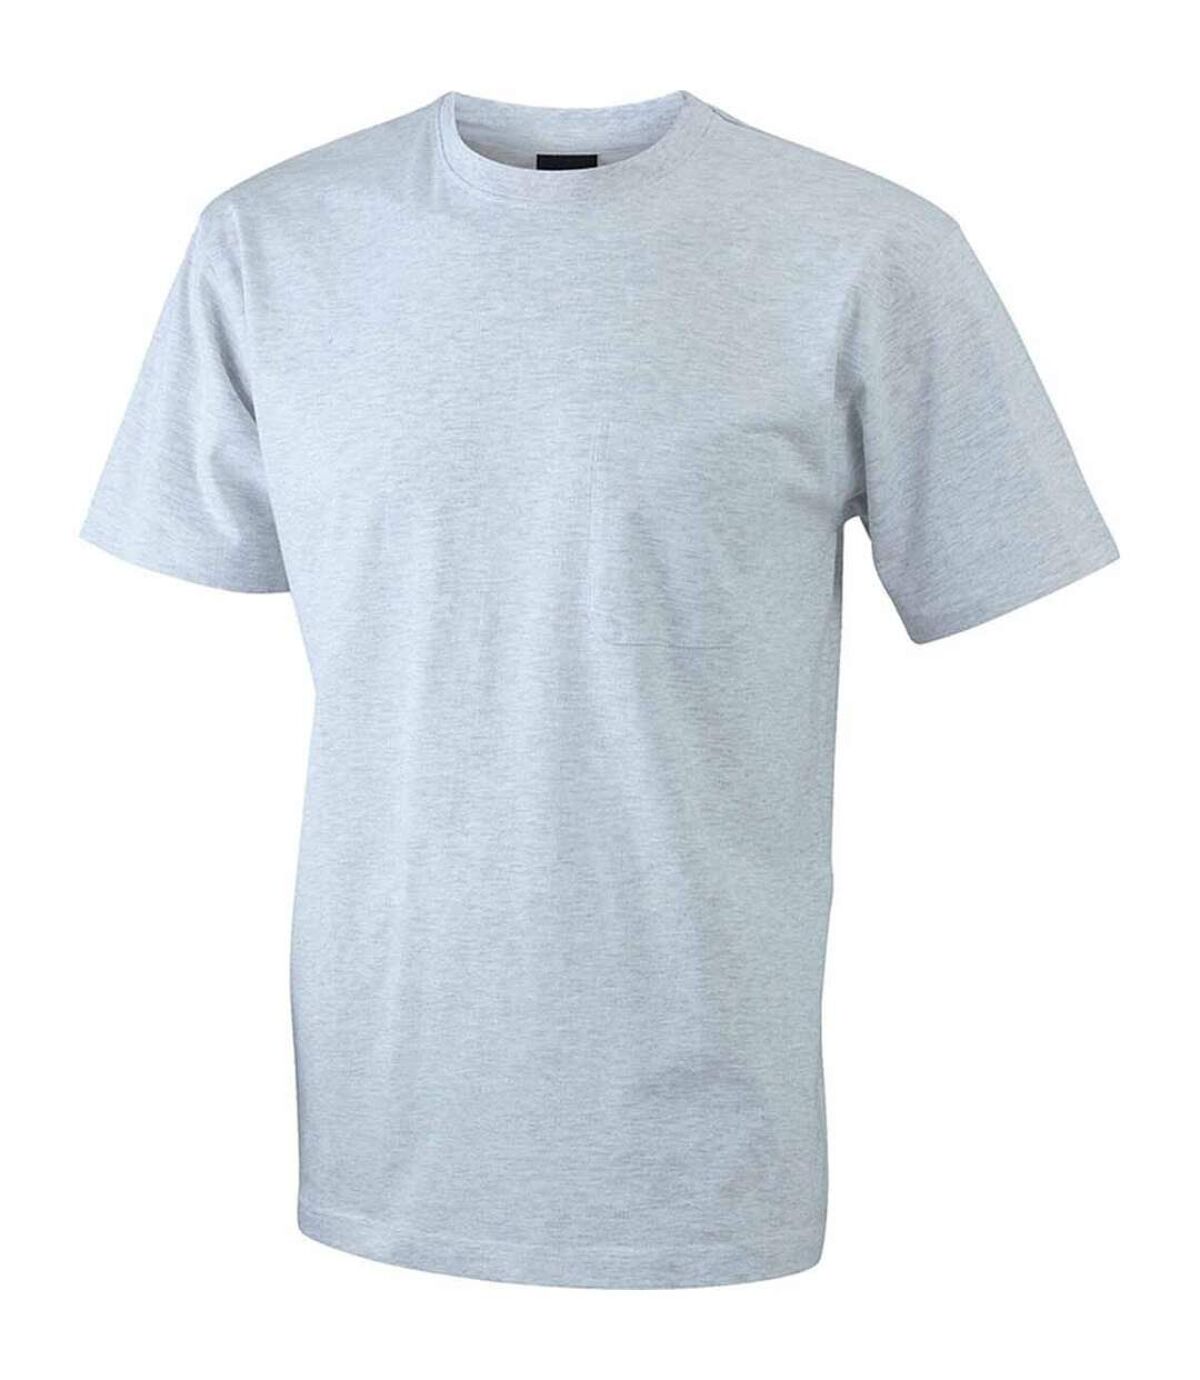 T-shirt homme poche poitrine - JN920 - gris chiné - workwear